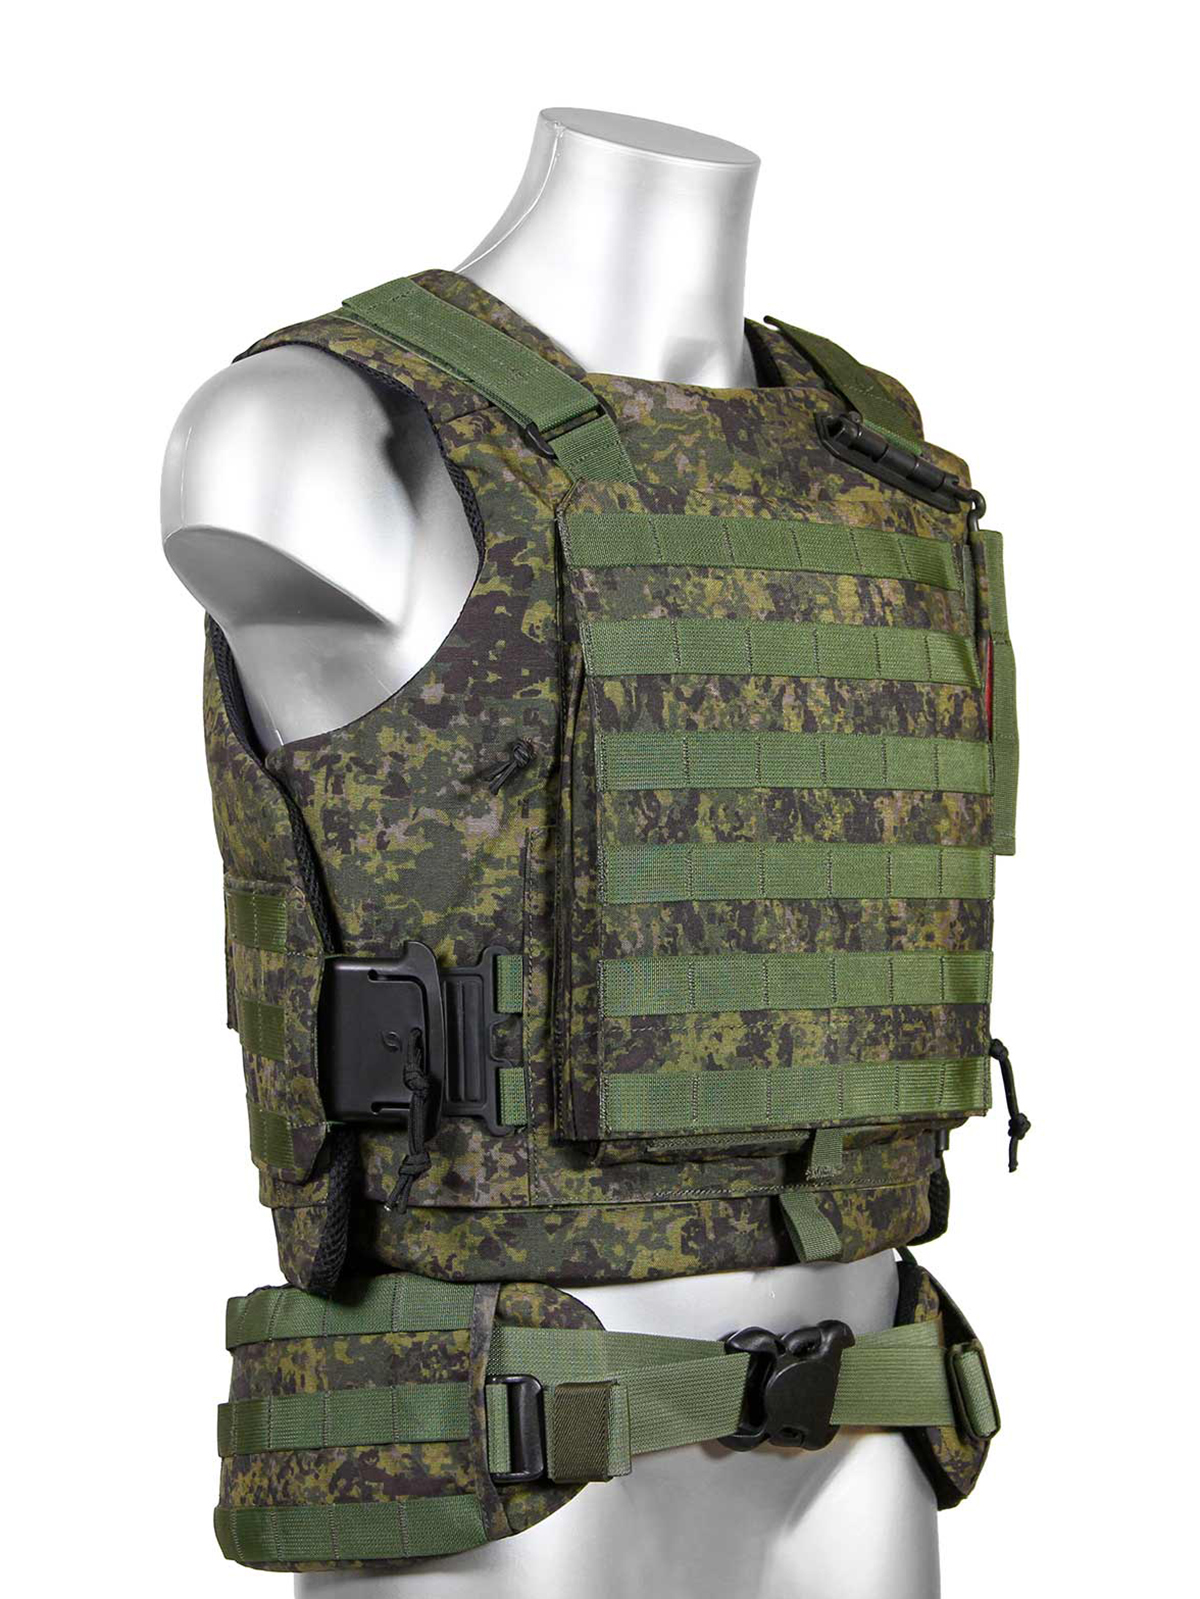 full tactical body armor